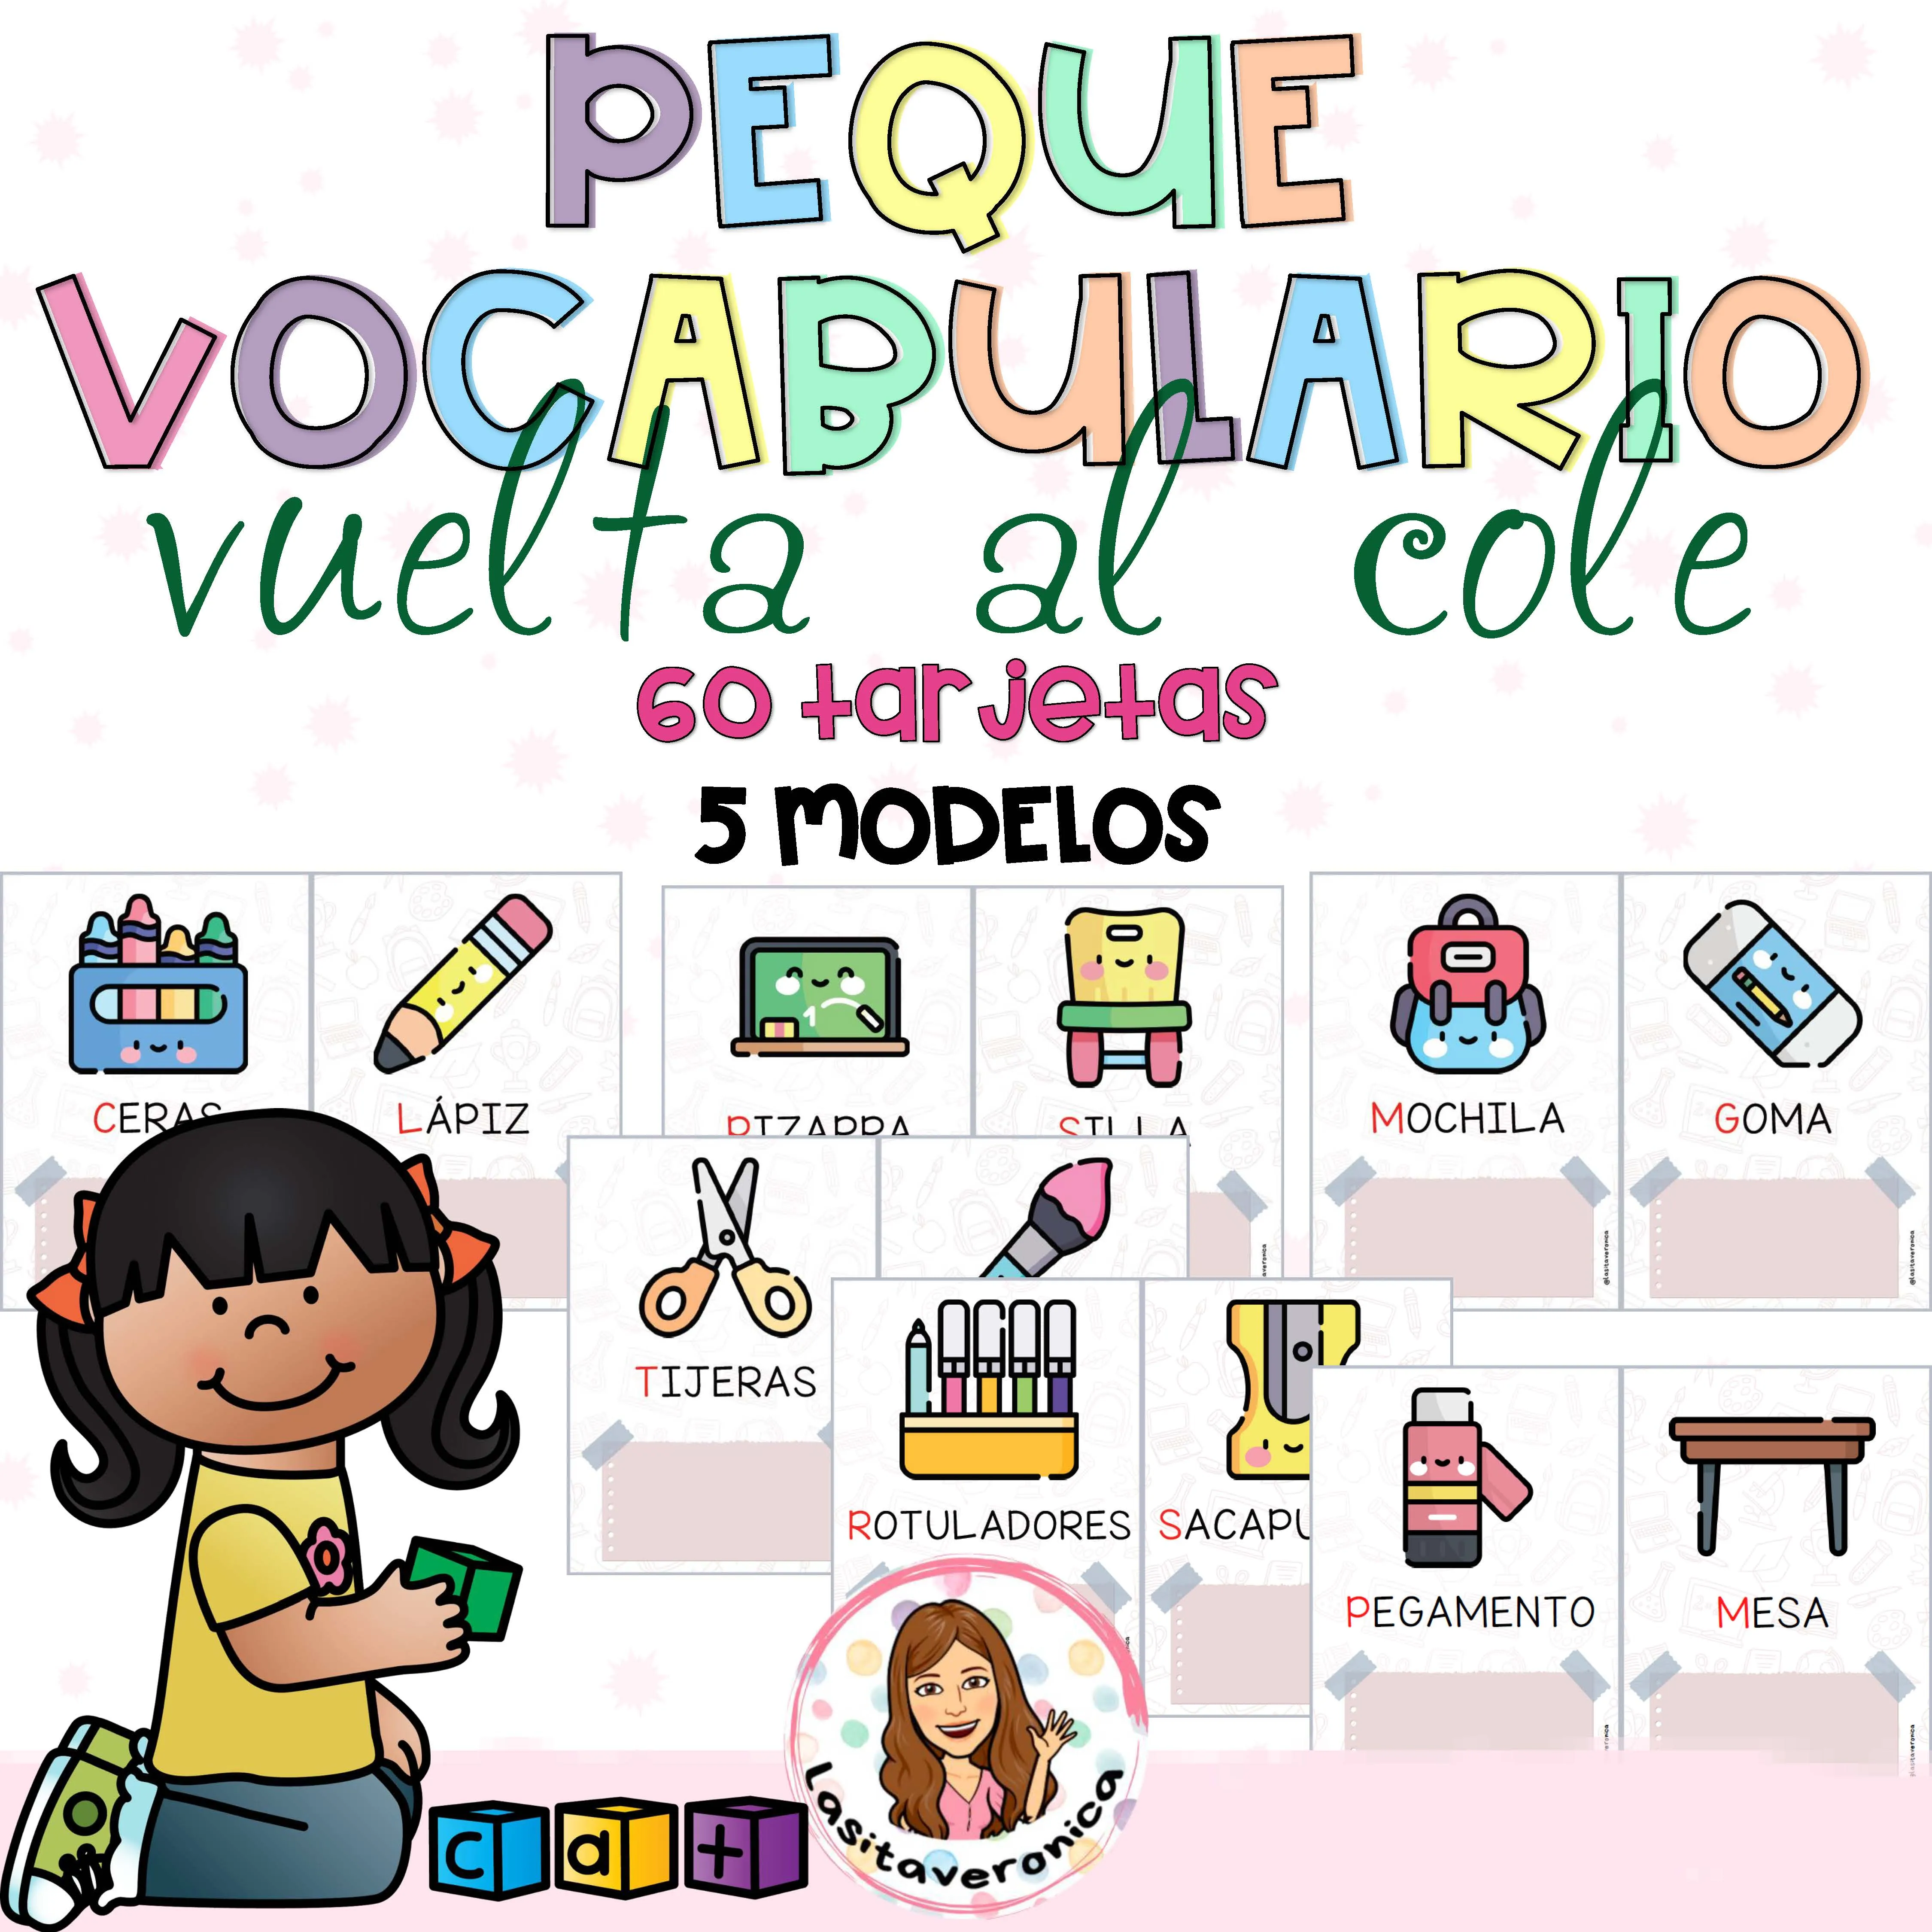 Pequevocabulario vuelta al cole/ Vocabulary back to school. Prekinder. Spanish.